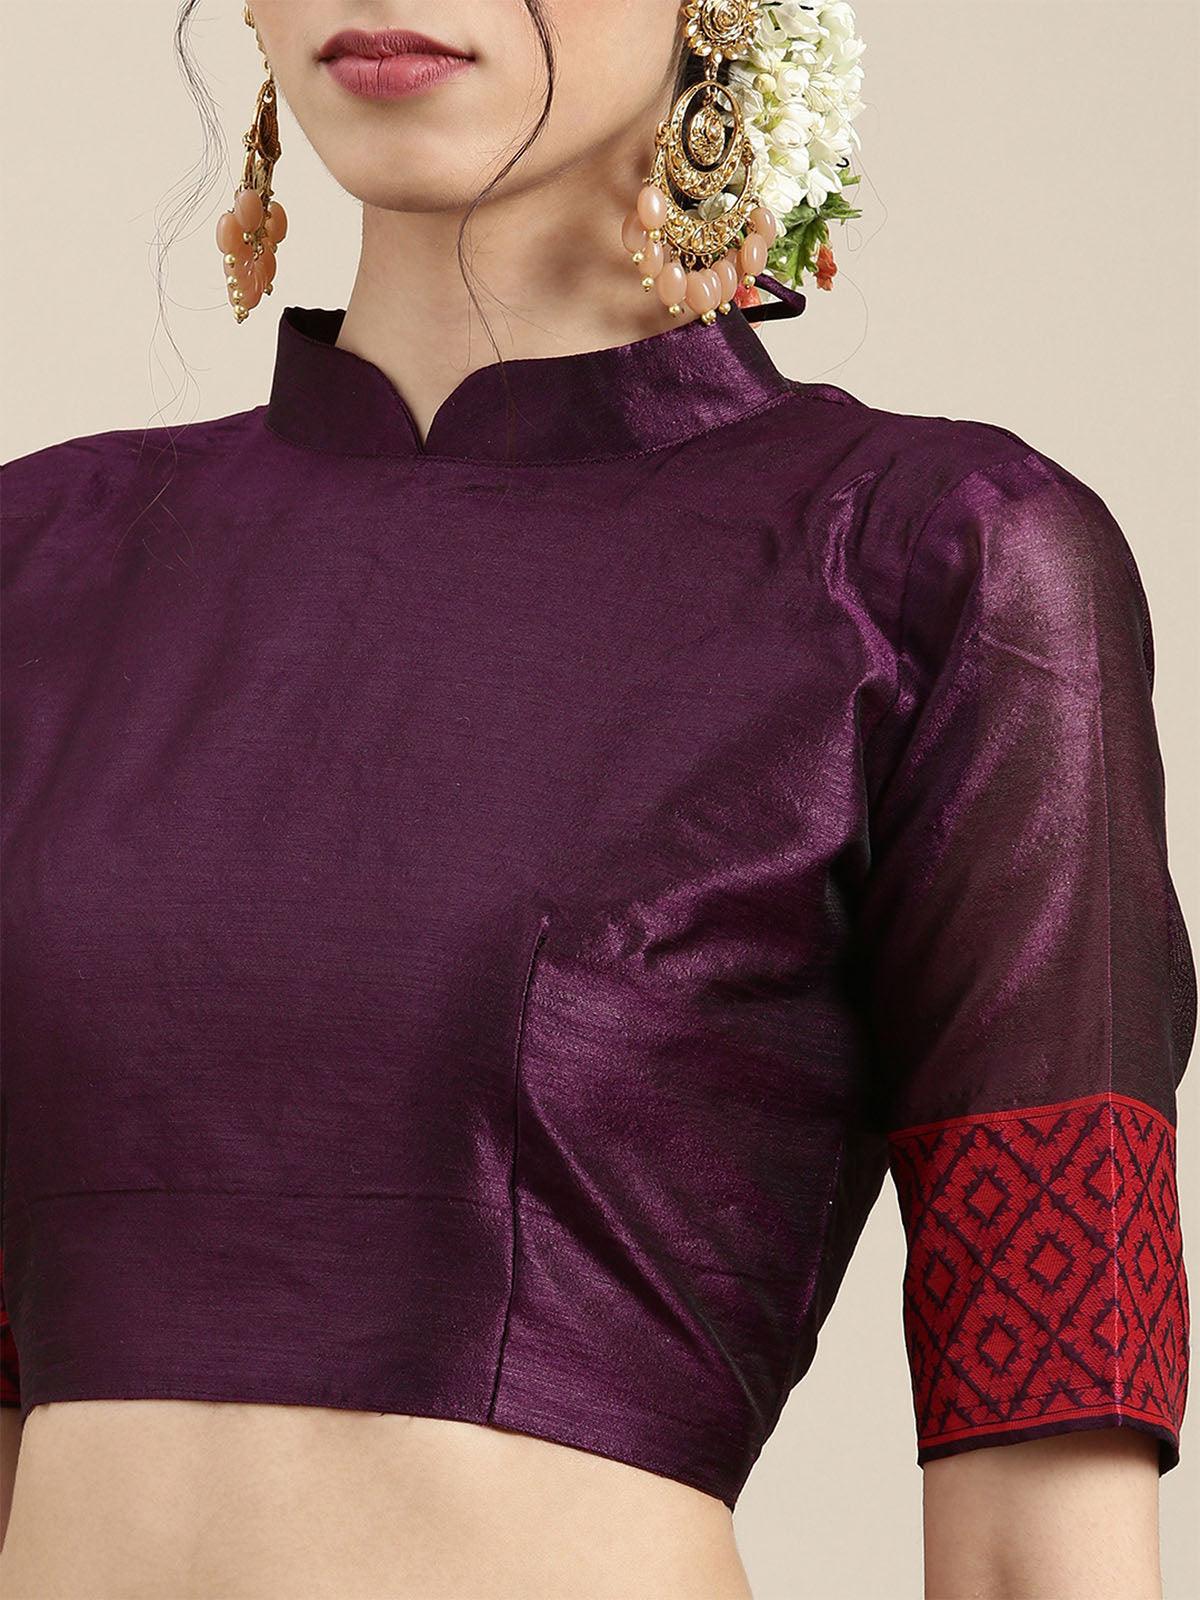 Women's Silk Blend Purple Woven Design Designer Saree With Blouse Piece - Odette